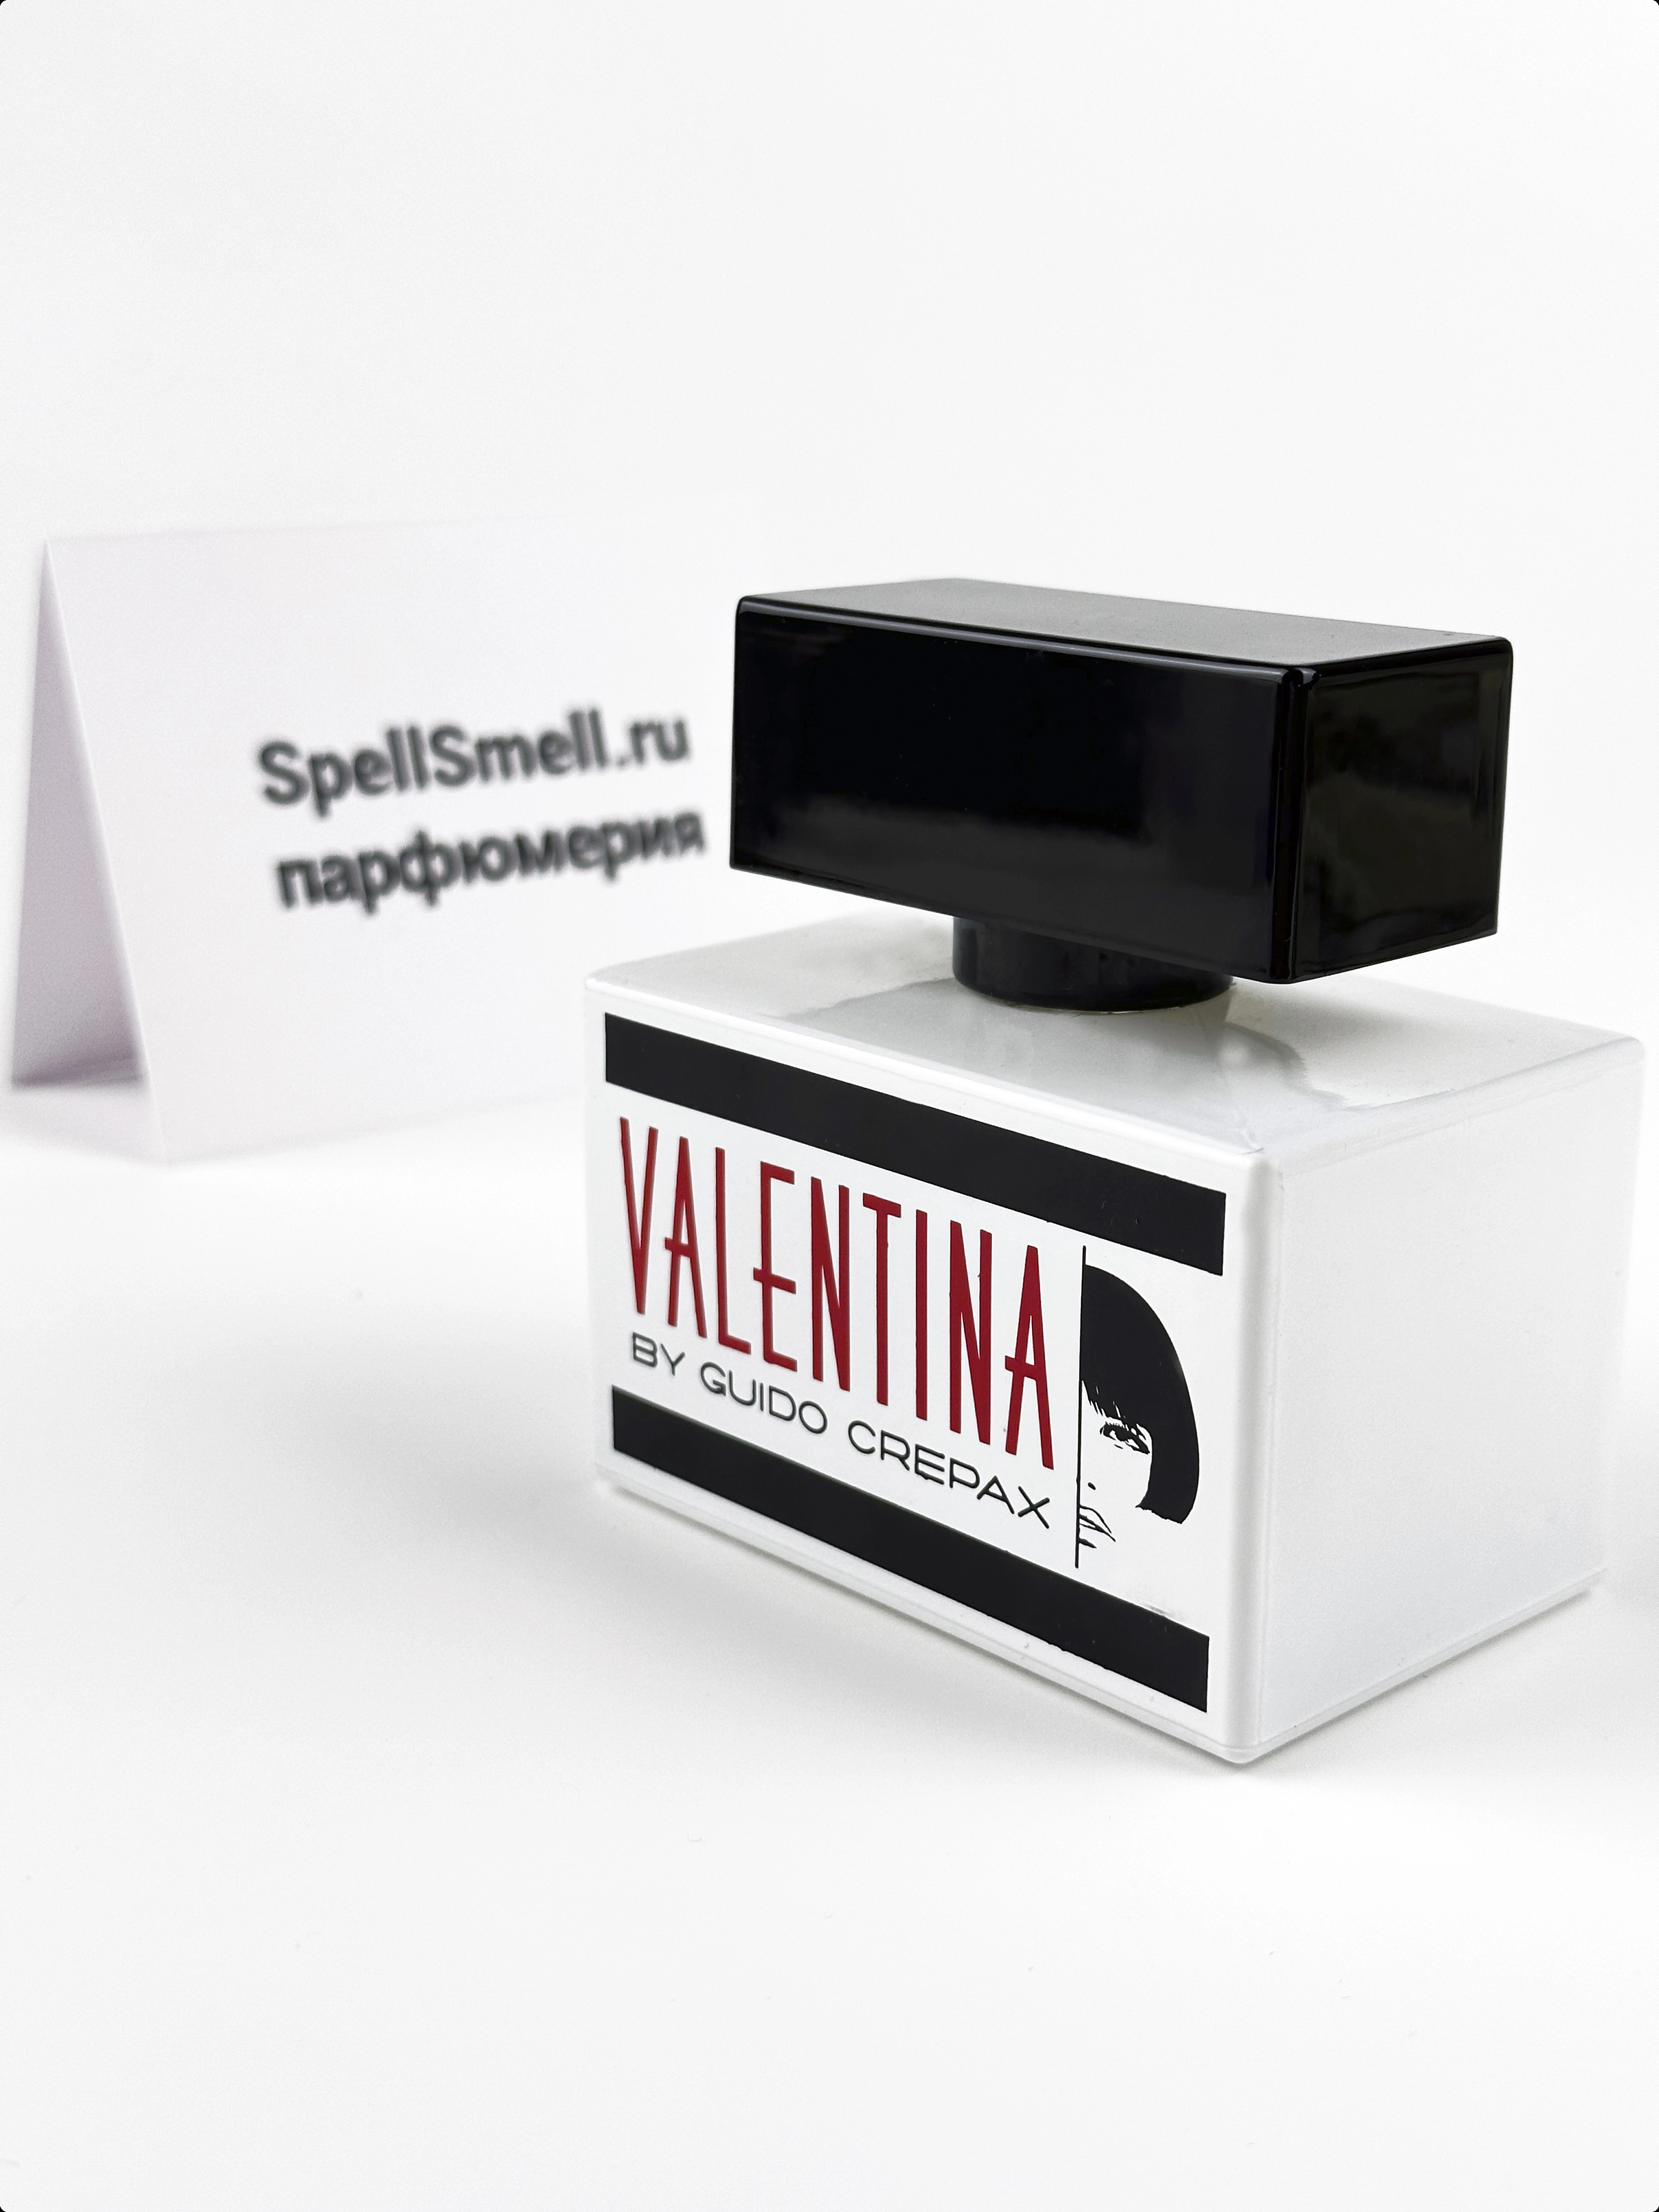 Valentina by Guido Crepax Valentina Туалетная вода 100 мл для женщин